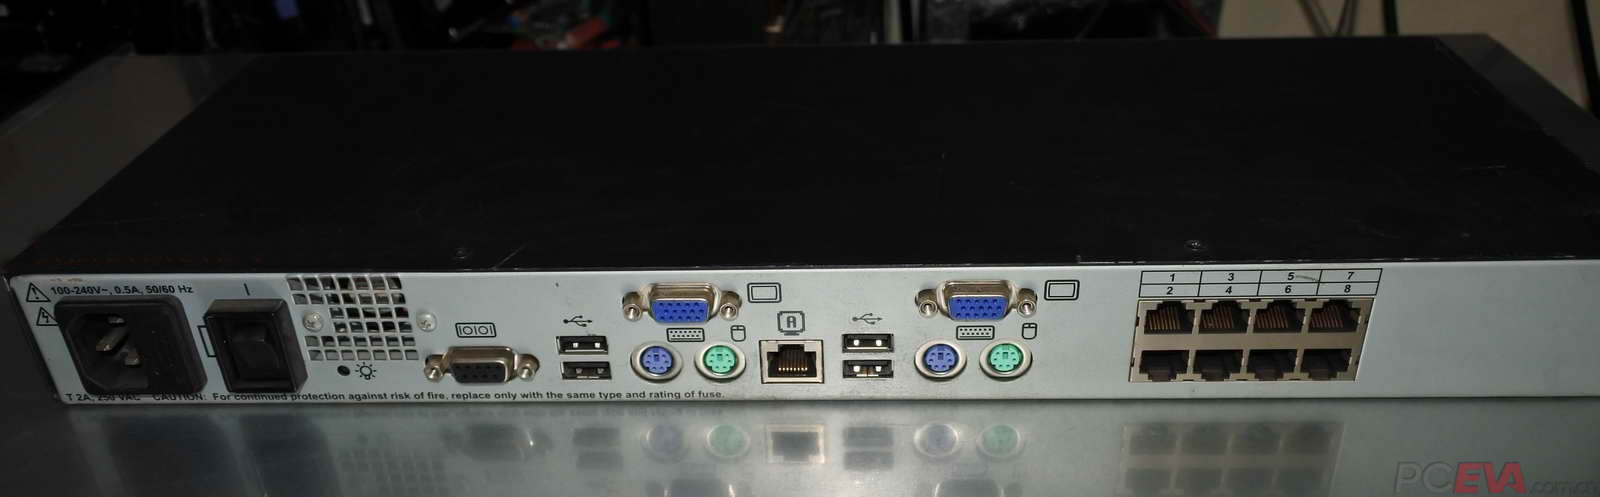 HP 8口KVM 8路网口切换器 AF616A 513735-001.jpg